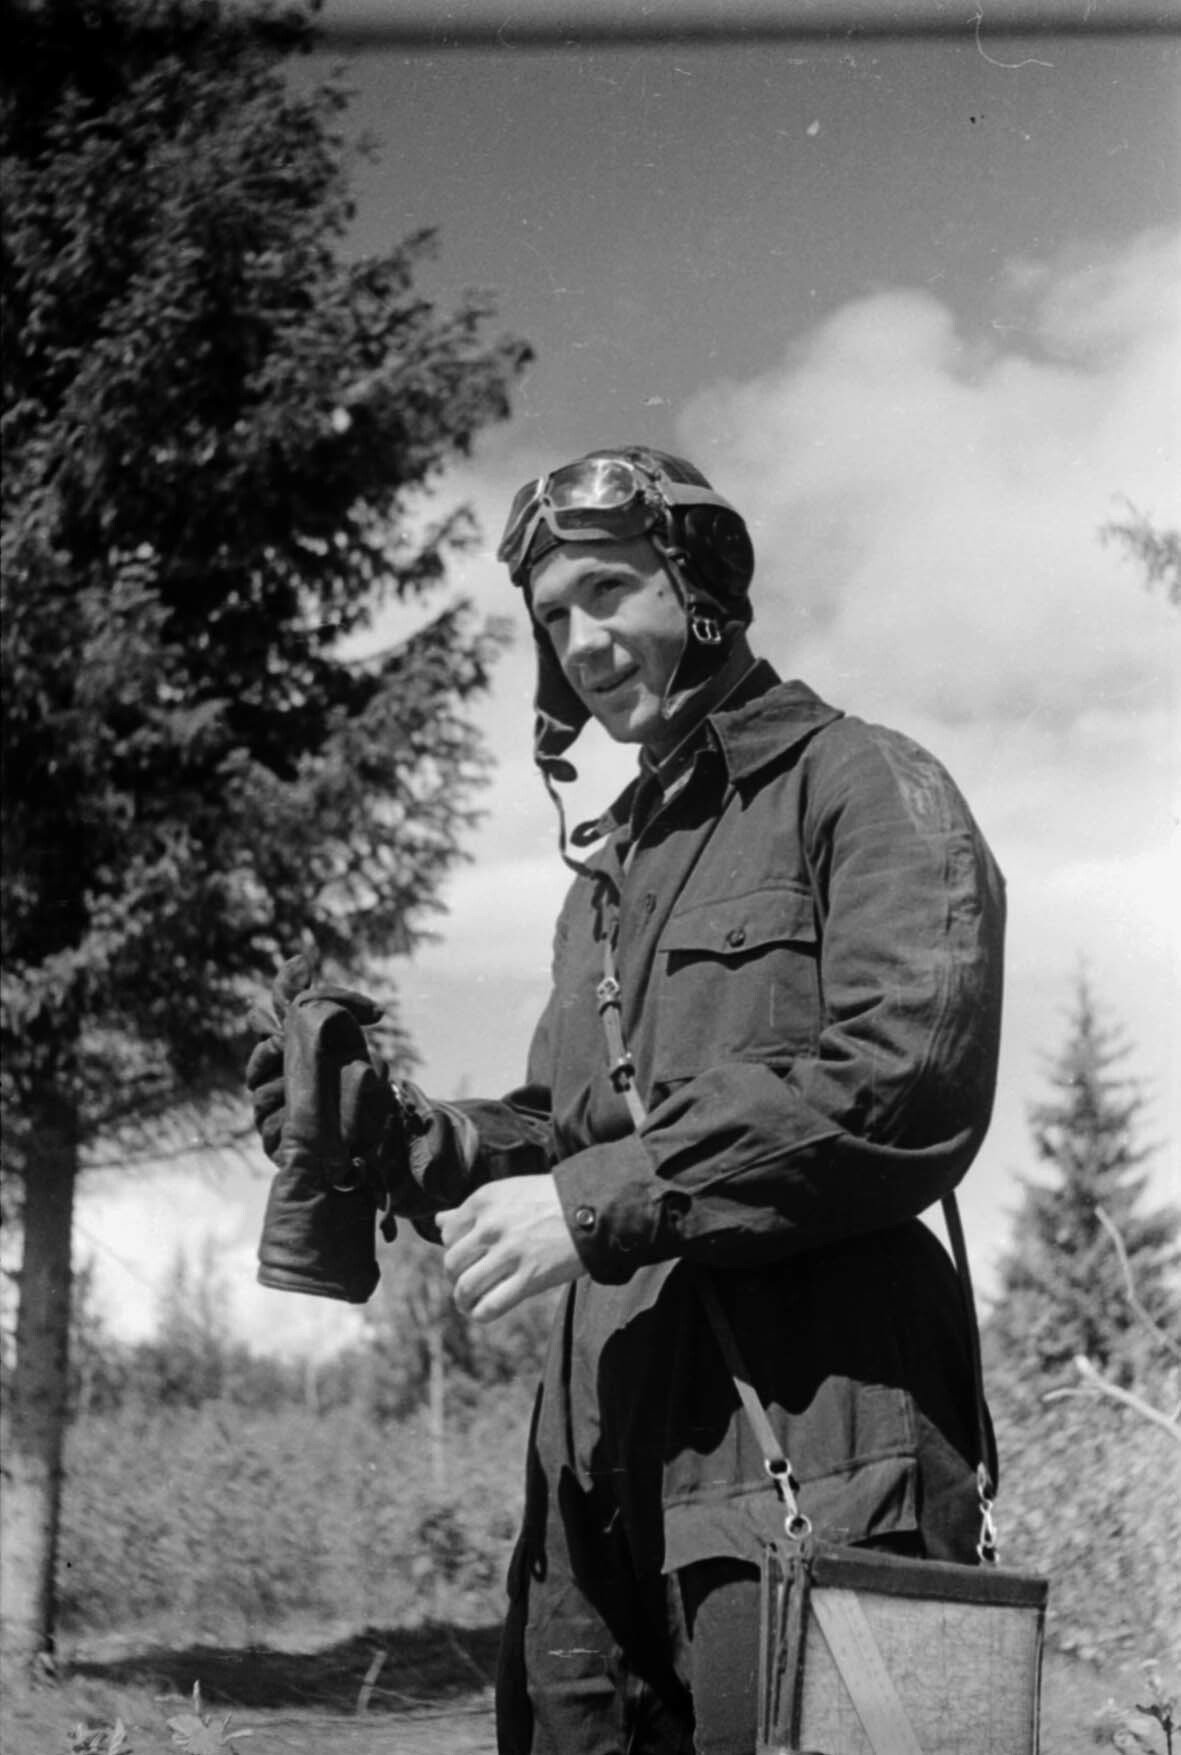 Fotografie: Kettenkommandeur einer Schlachtfliegerstaffel, Kalininer Front, 12. Juni 1942 (Museum Berlin-Karlshorst RR-P)